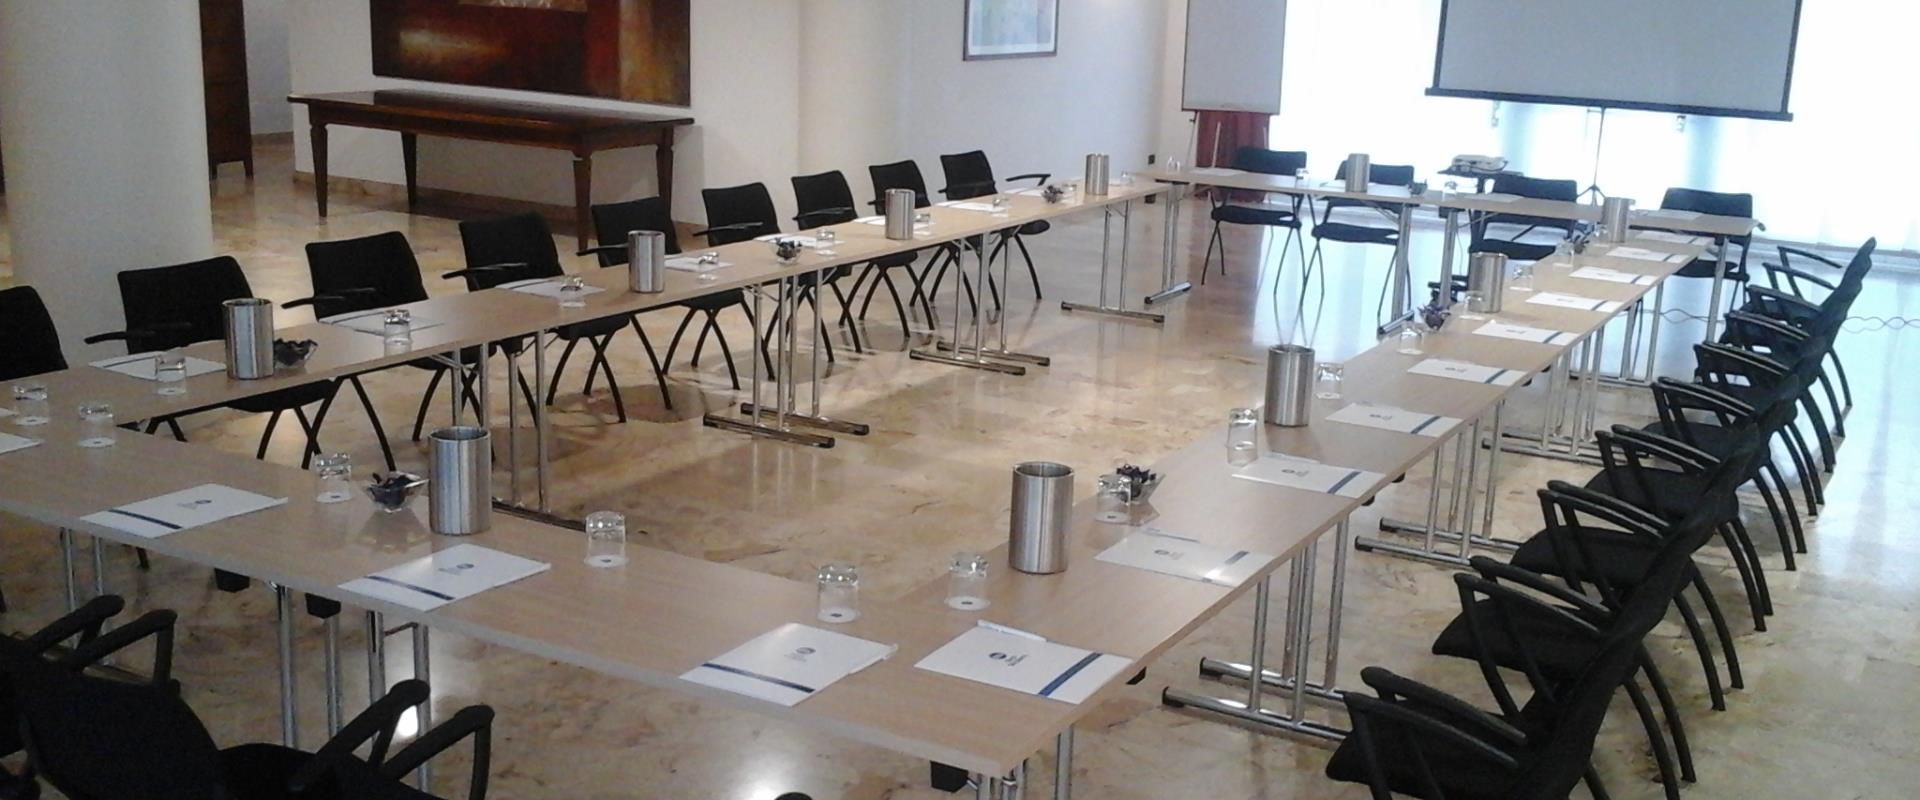 Visconti Meeting Room - U-Shape